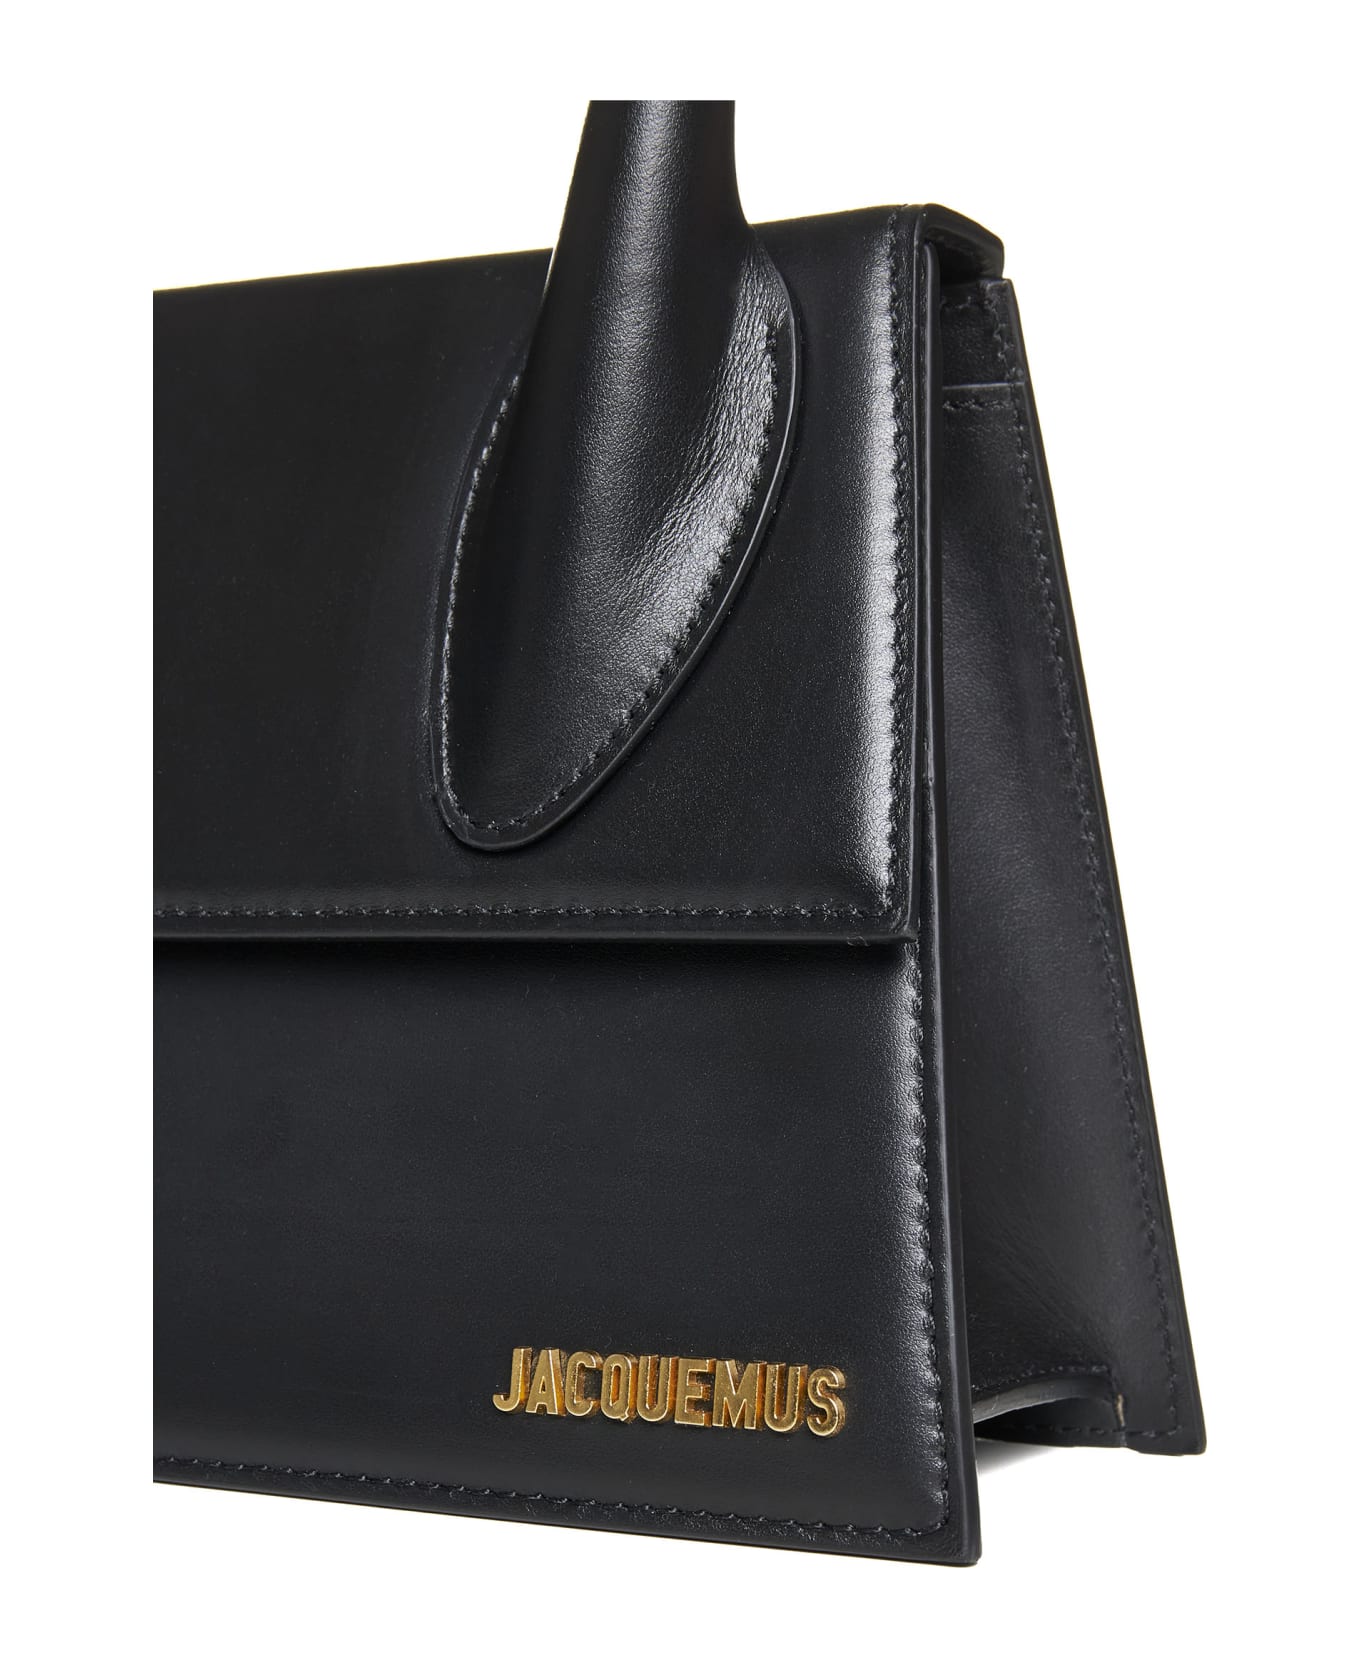 Jacquemus Le Grand Chiquito Bag - Black